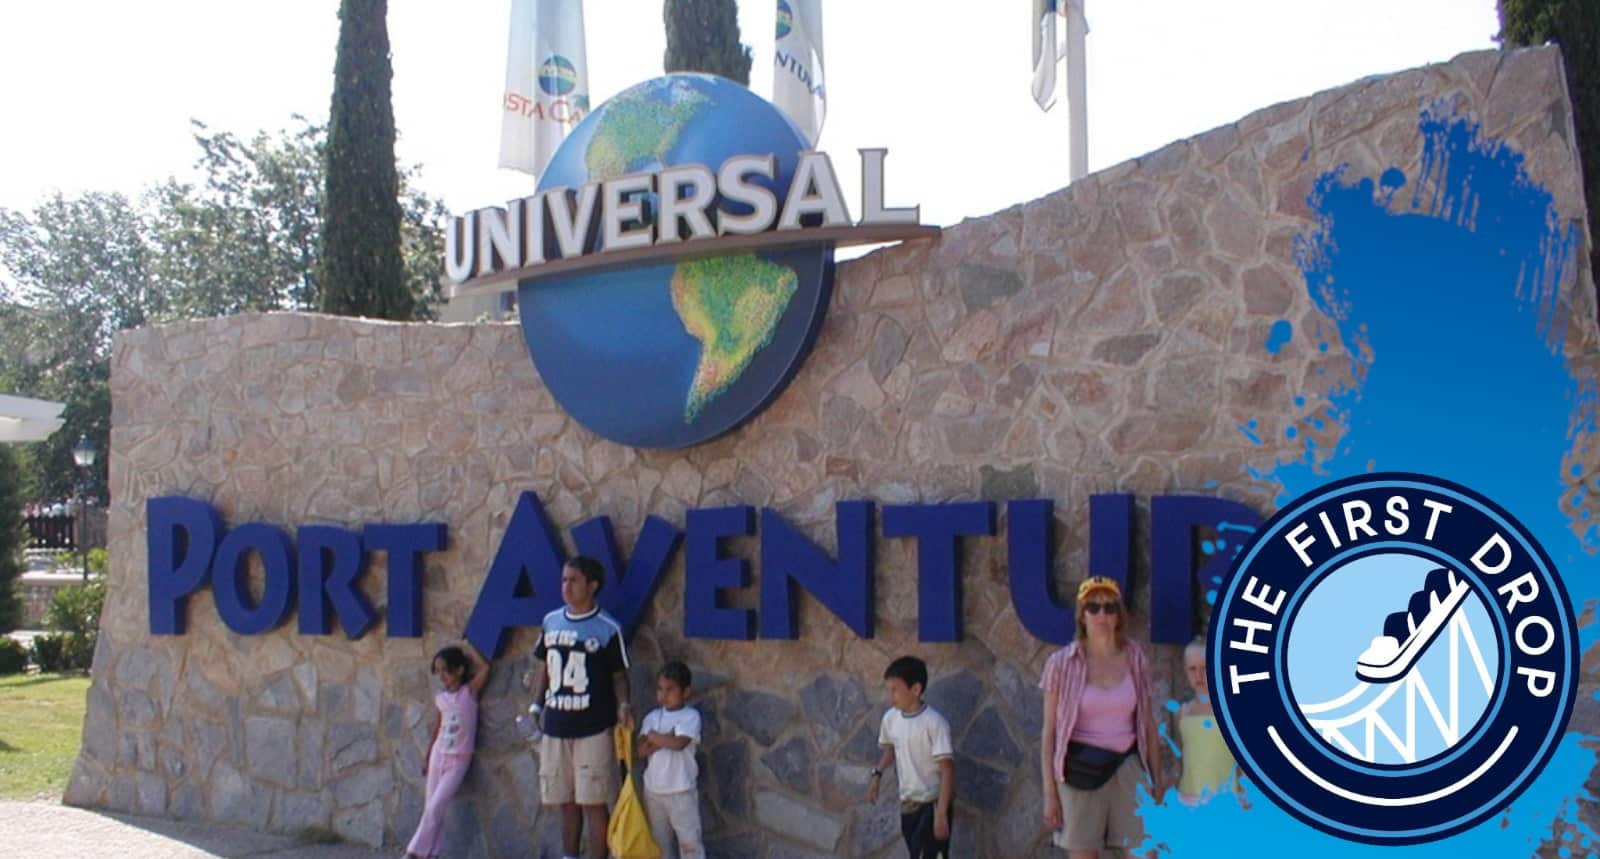 Universal Mediterranea The Former Universal Portaventura Connection